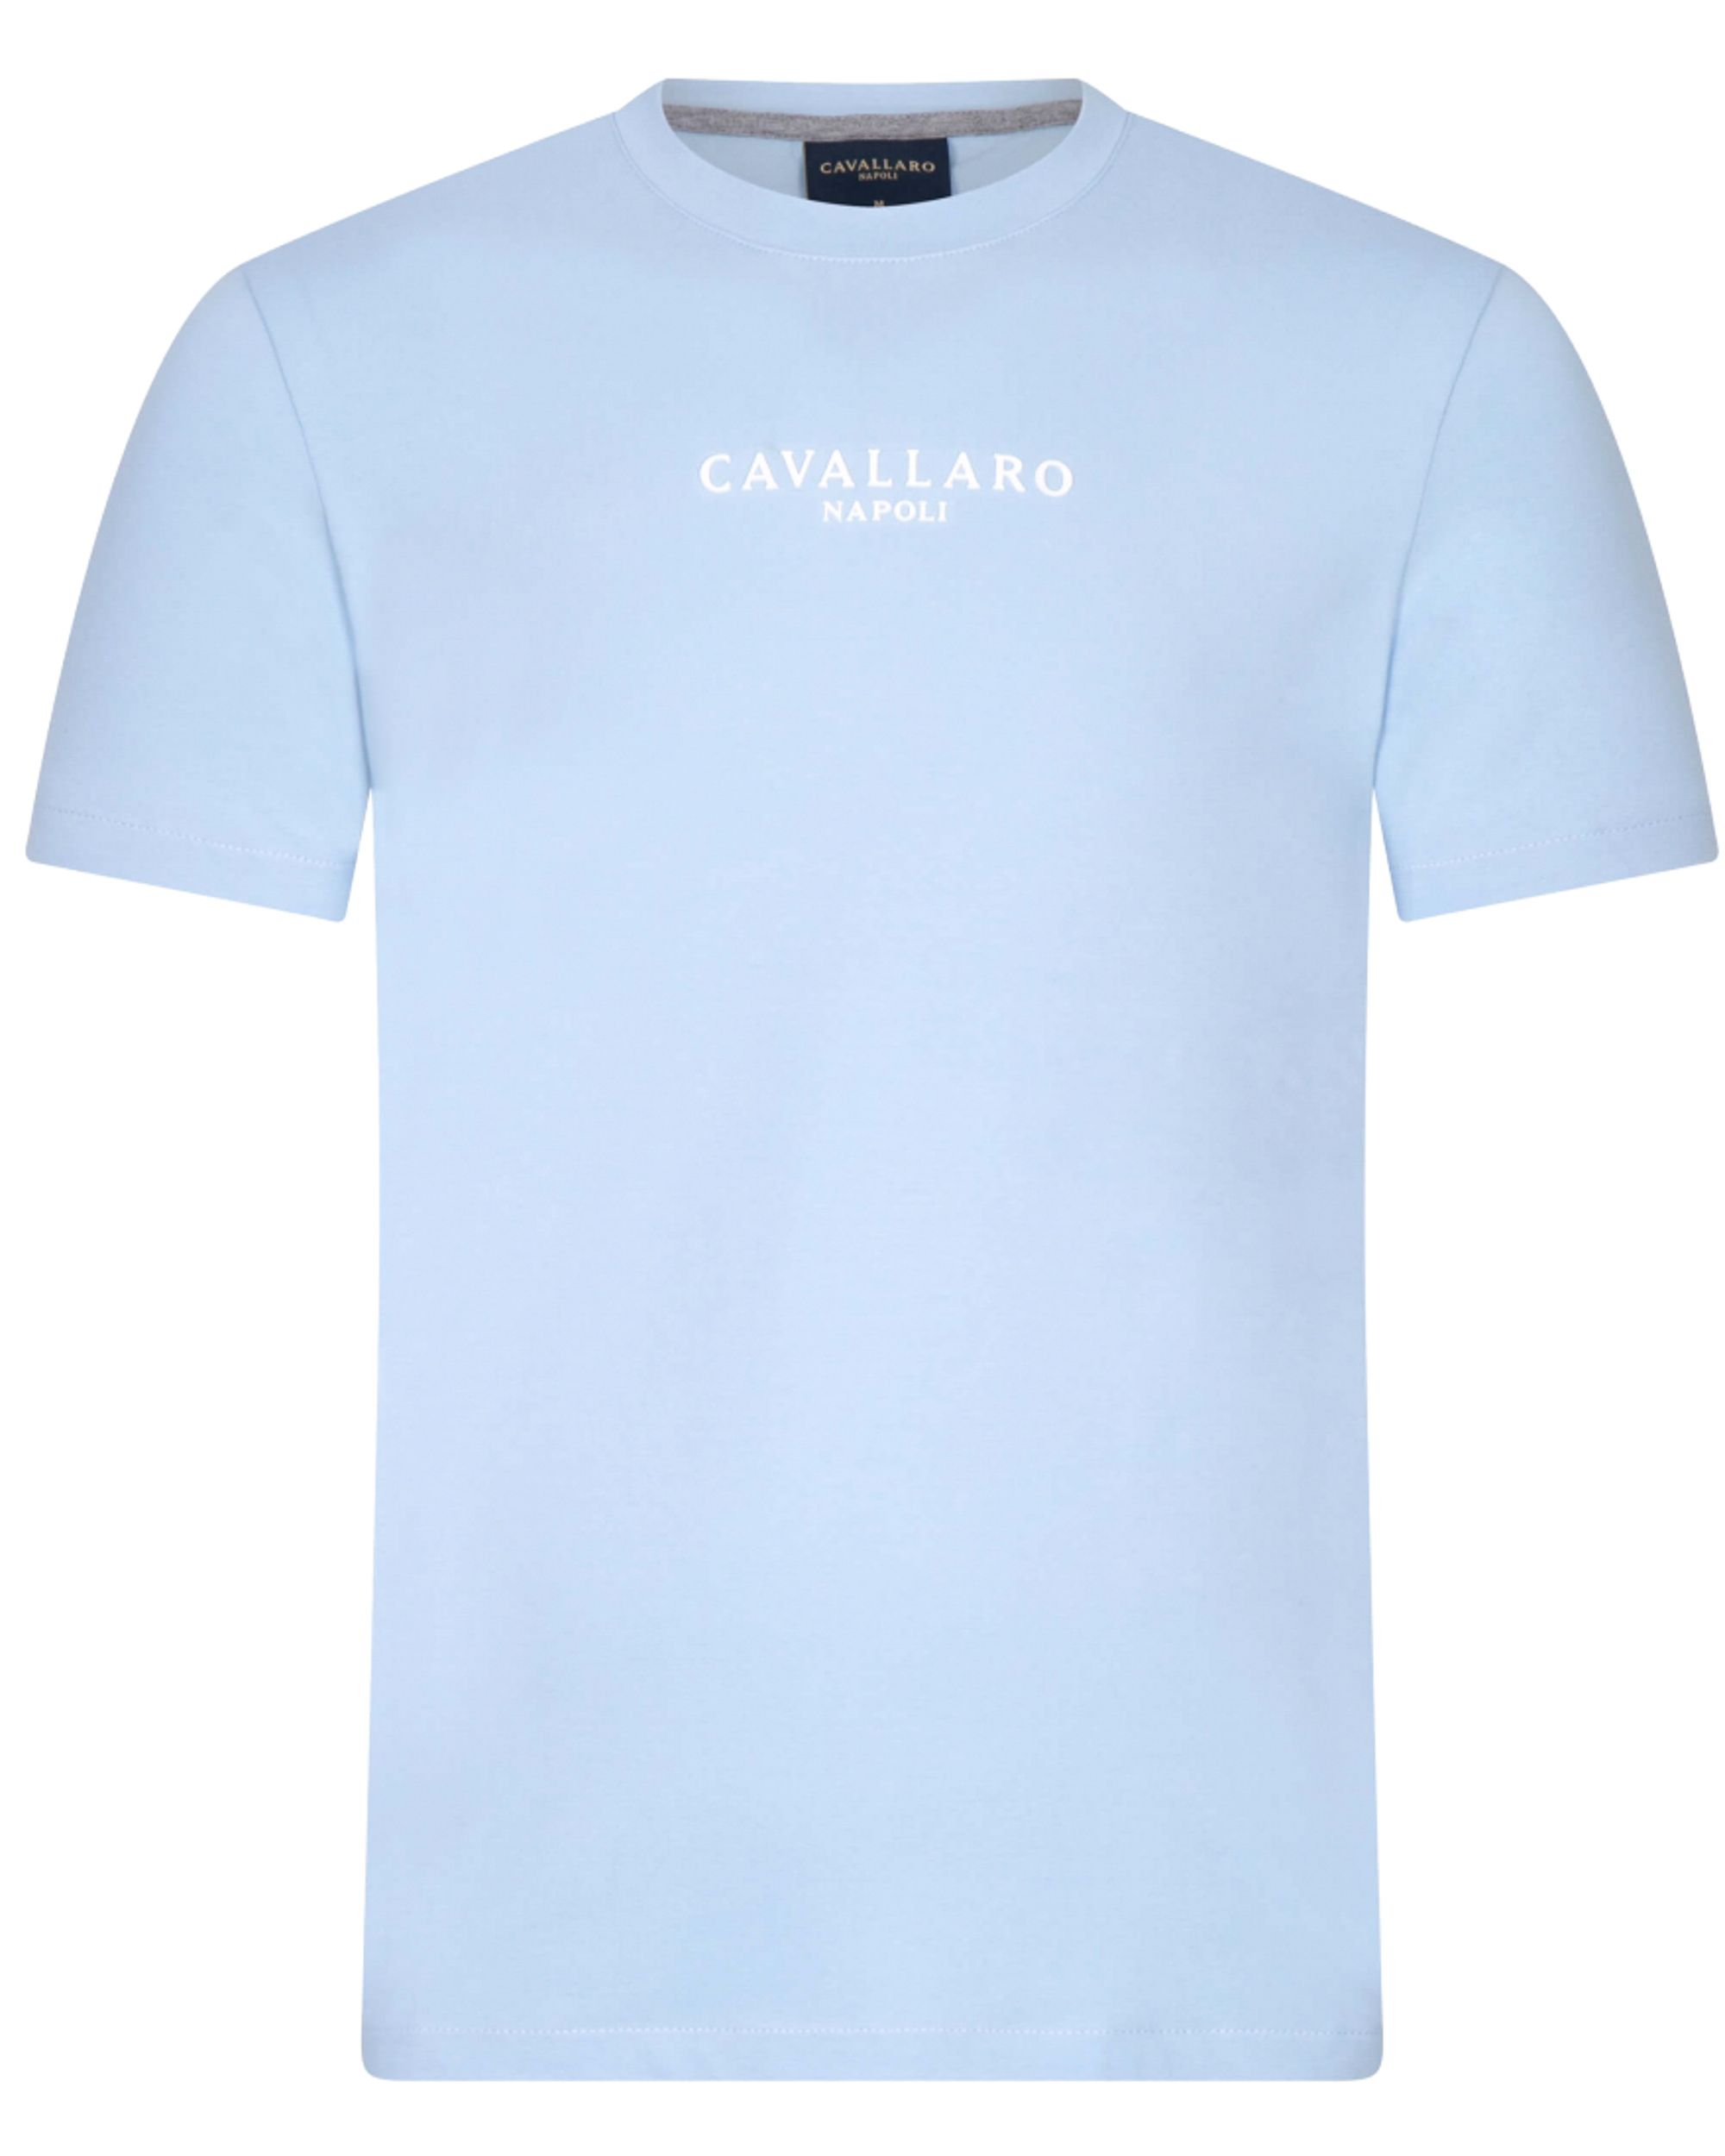 Cavallaro Mandrio T-shirt KM Blauw 094423-001-L